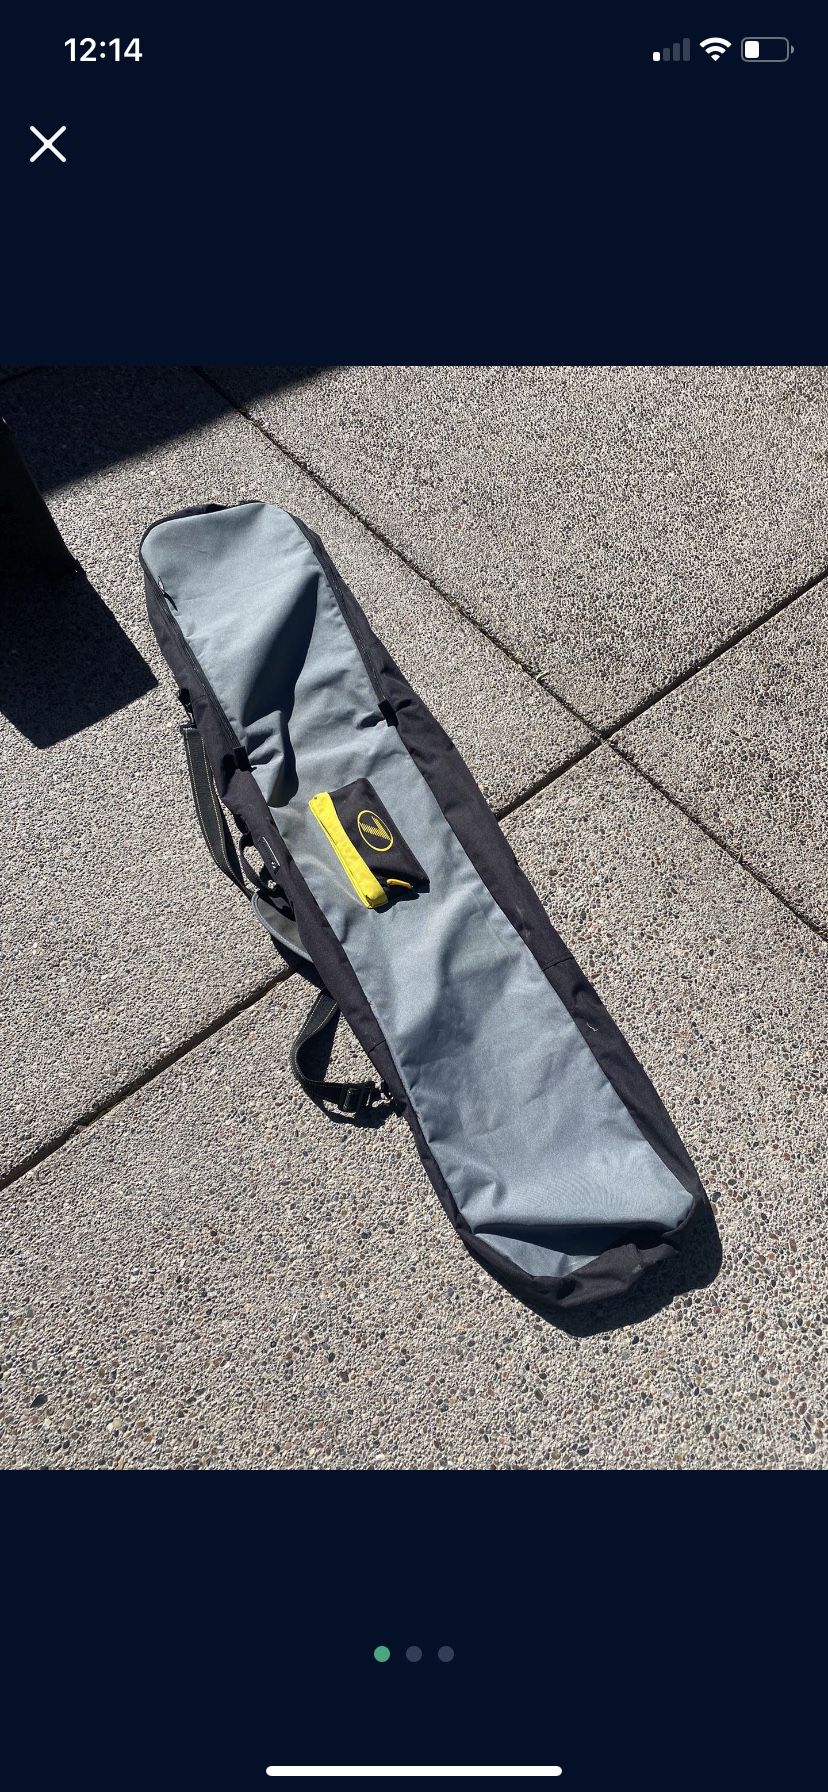 Snowboard travel bag